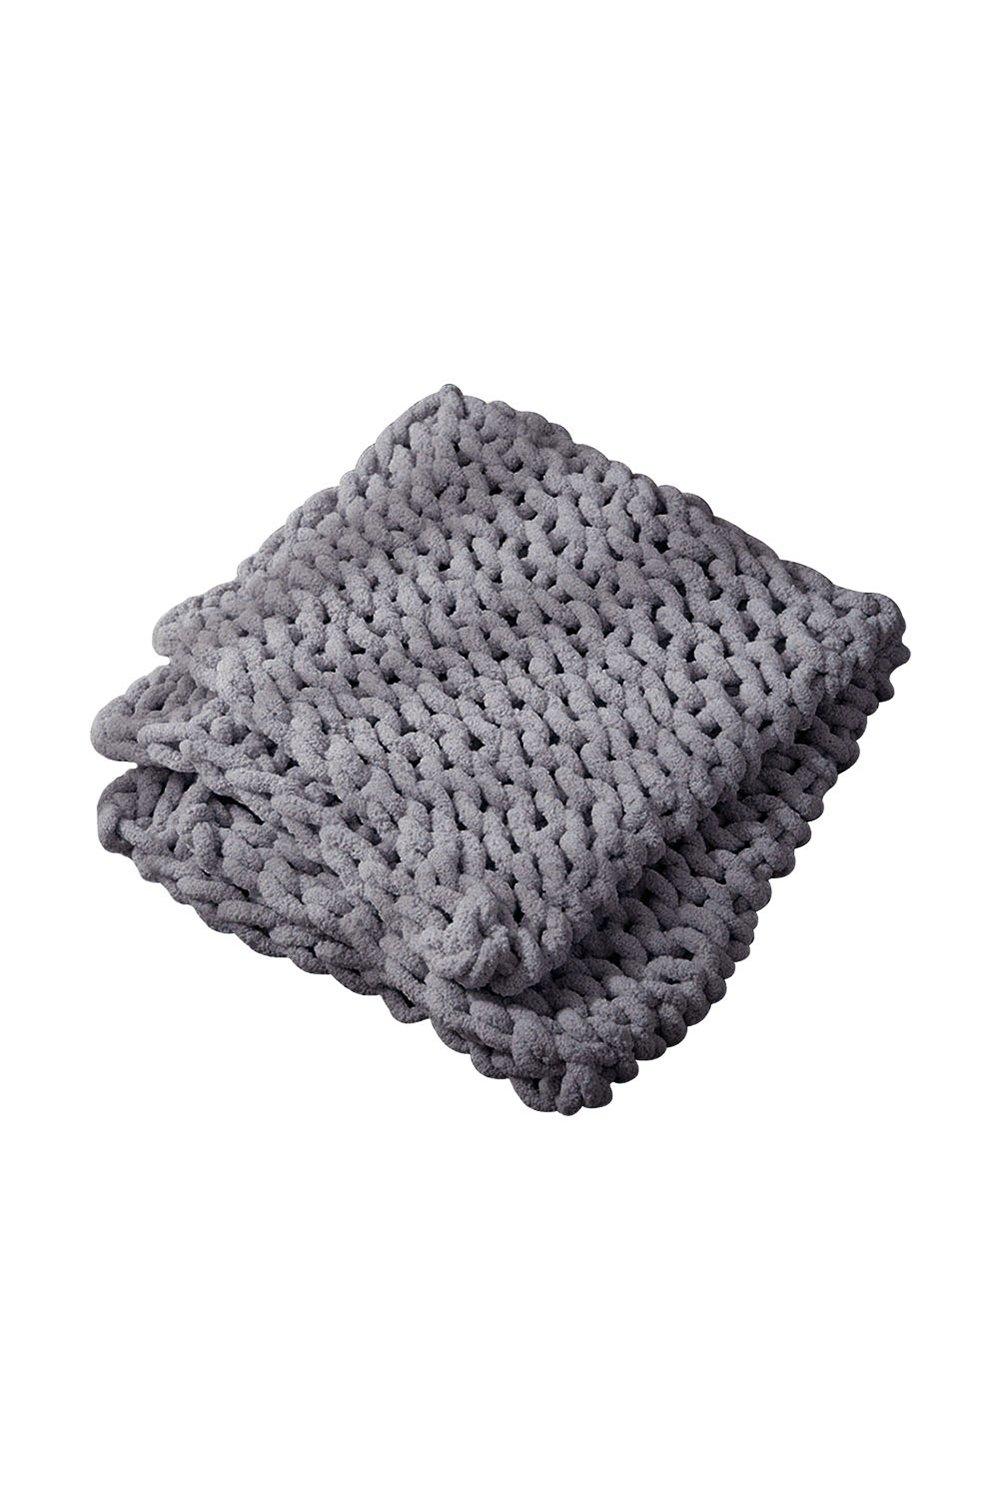 Chunky Knit Throw Blanket 60x60cm